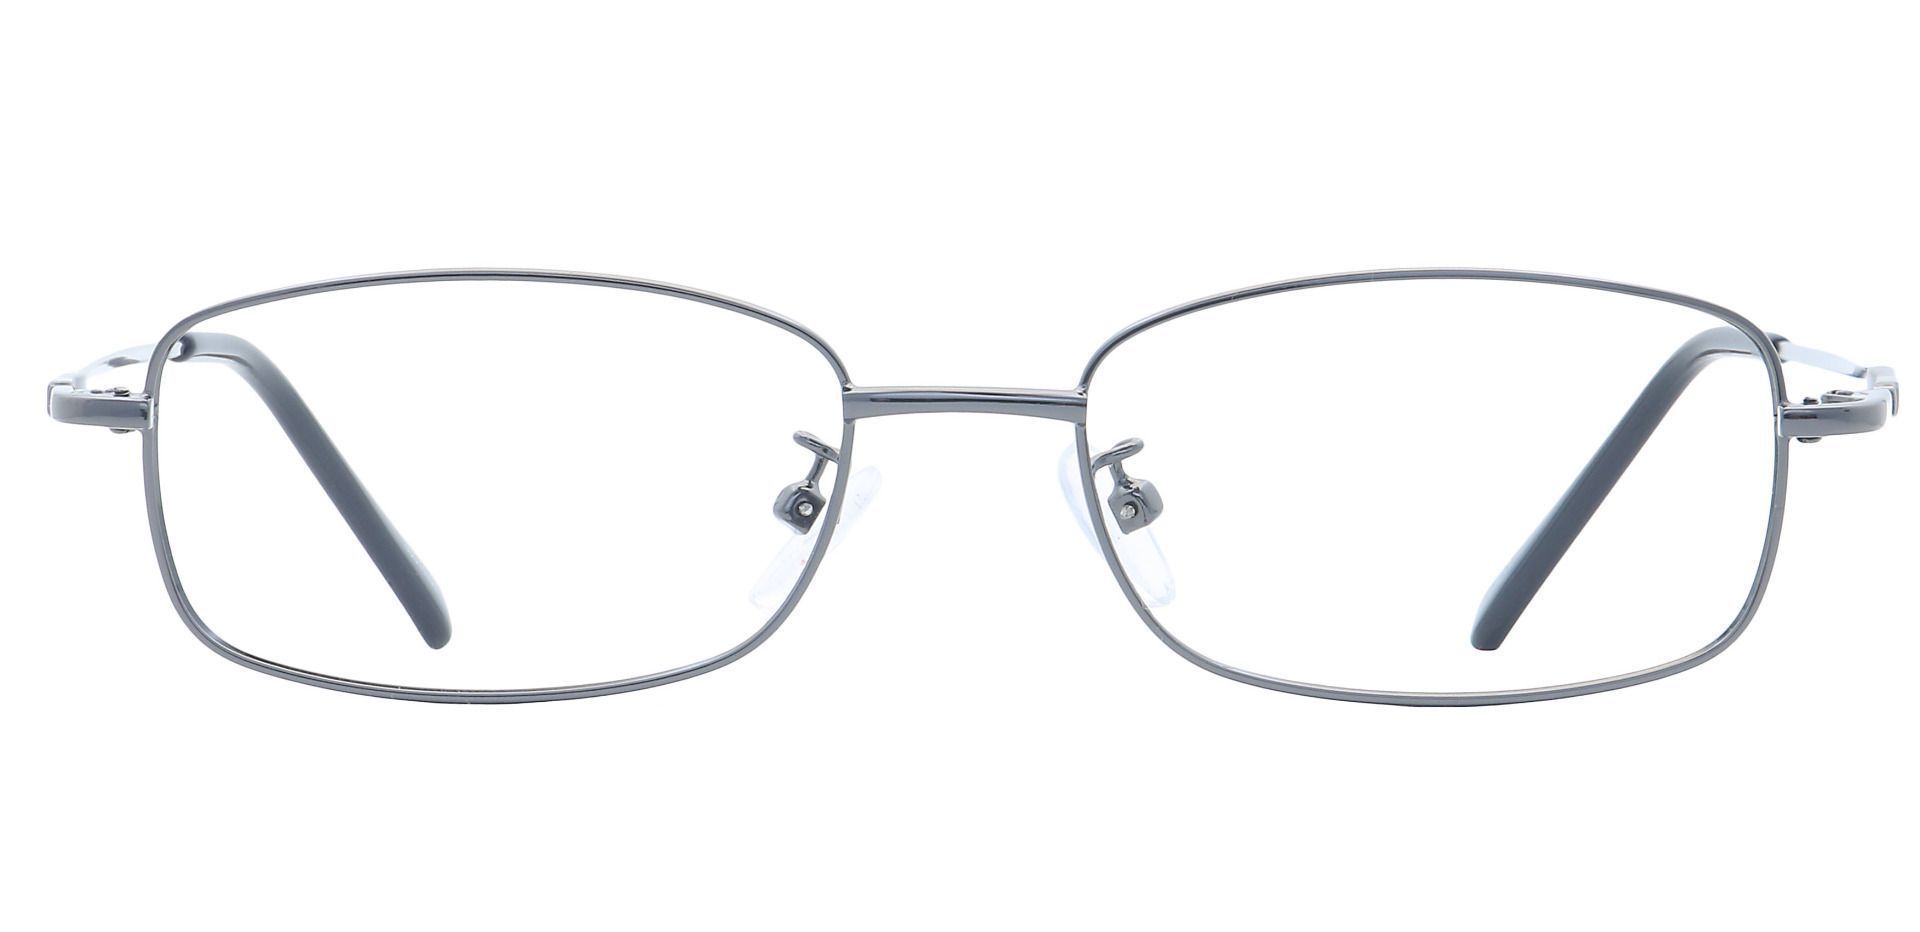 Ross Rectangle Lined Bifocal Glasses -  Gunmetal